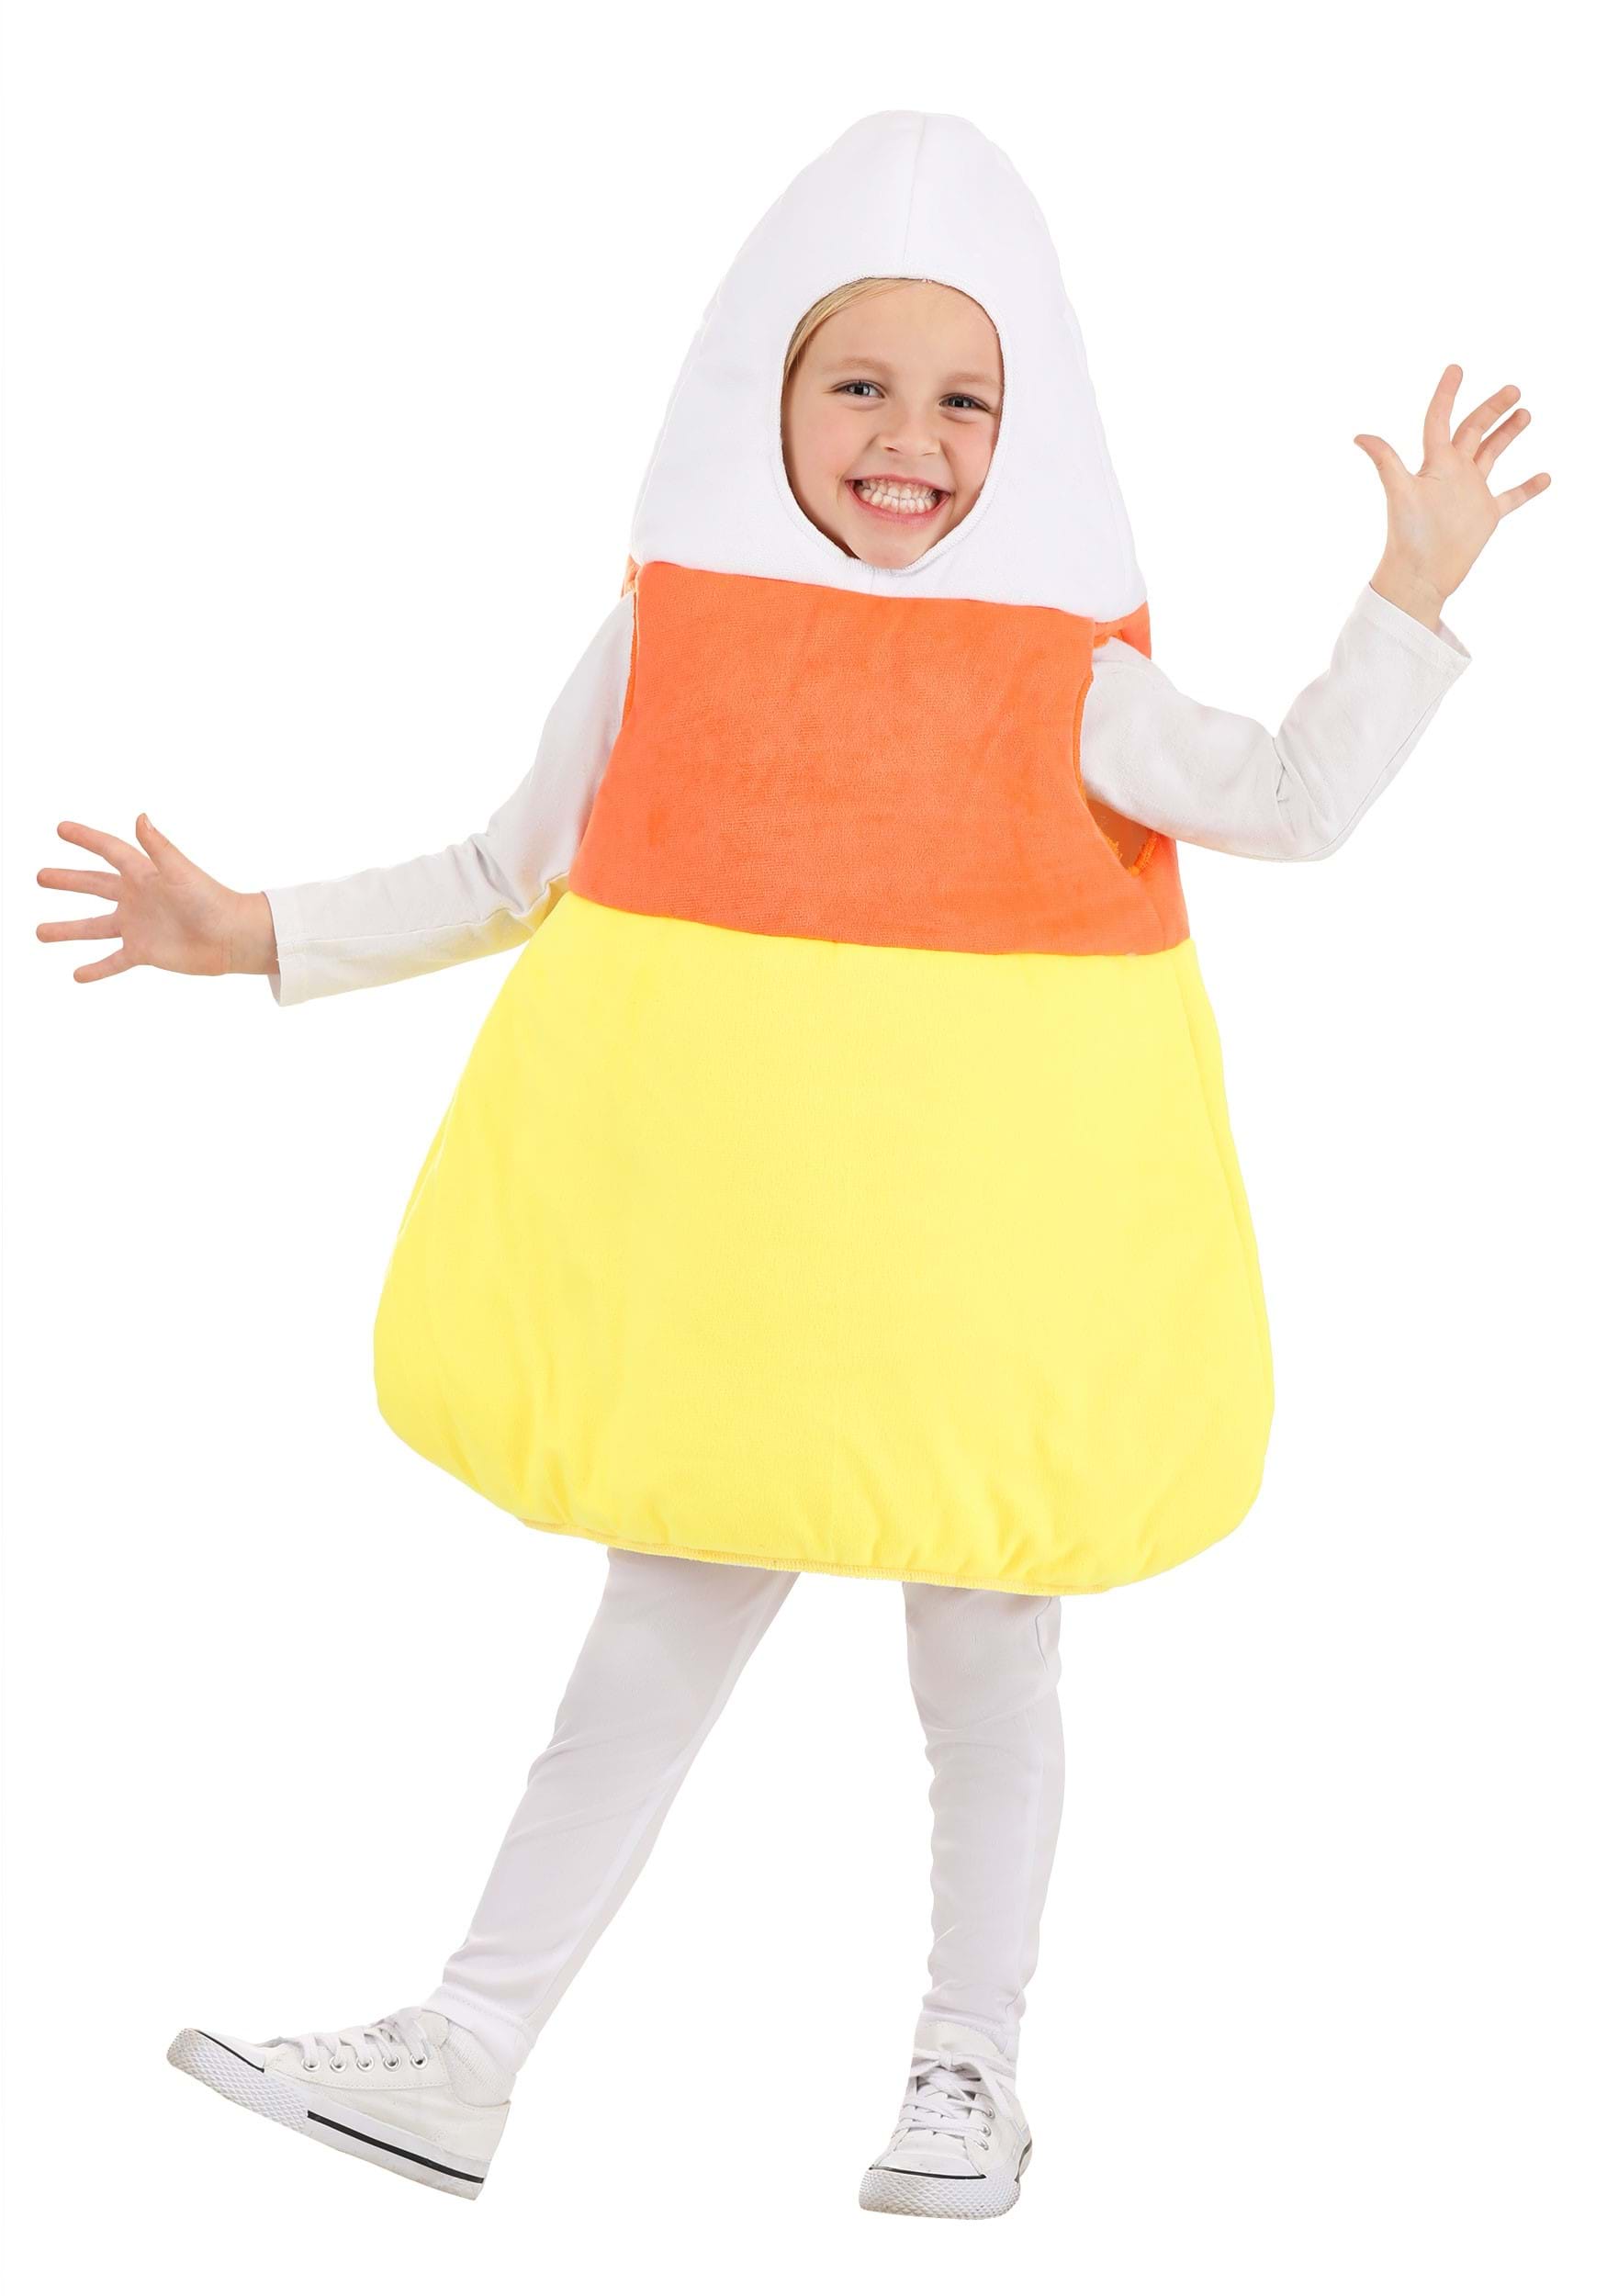 Candy corn costume